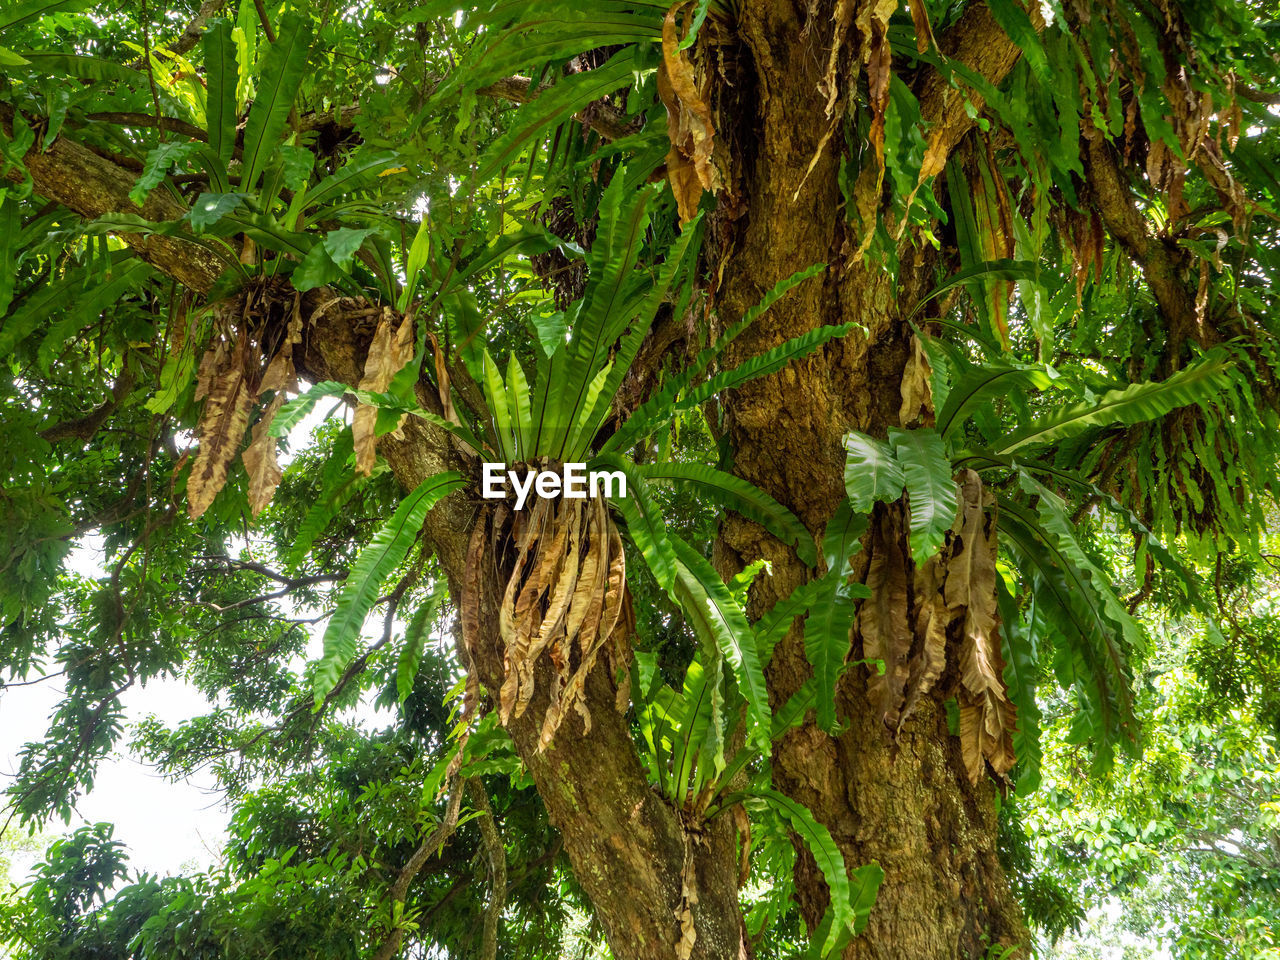 Several plants of green bird nest ferns growing on big tree trunk.